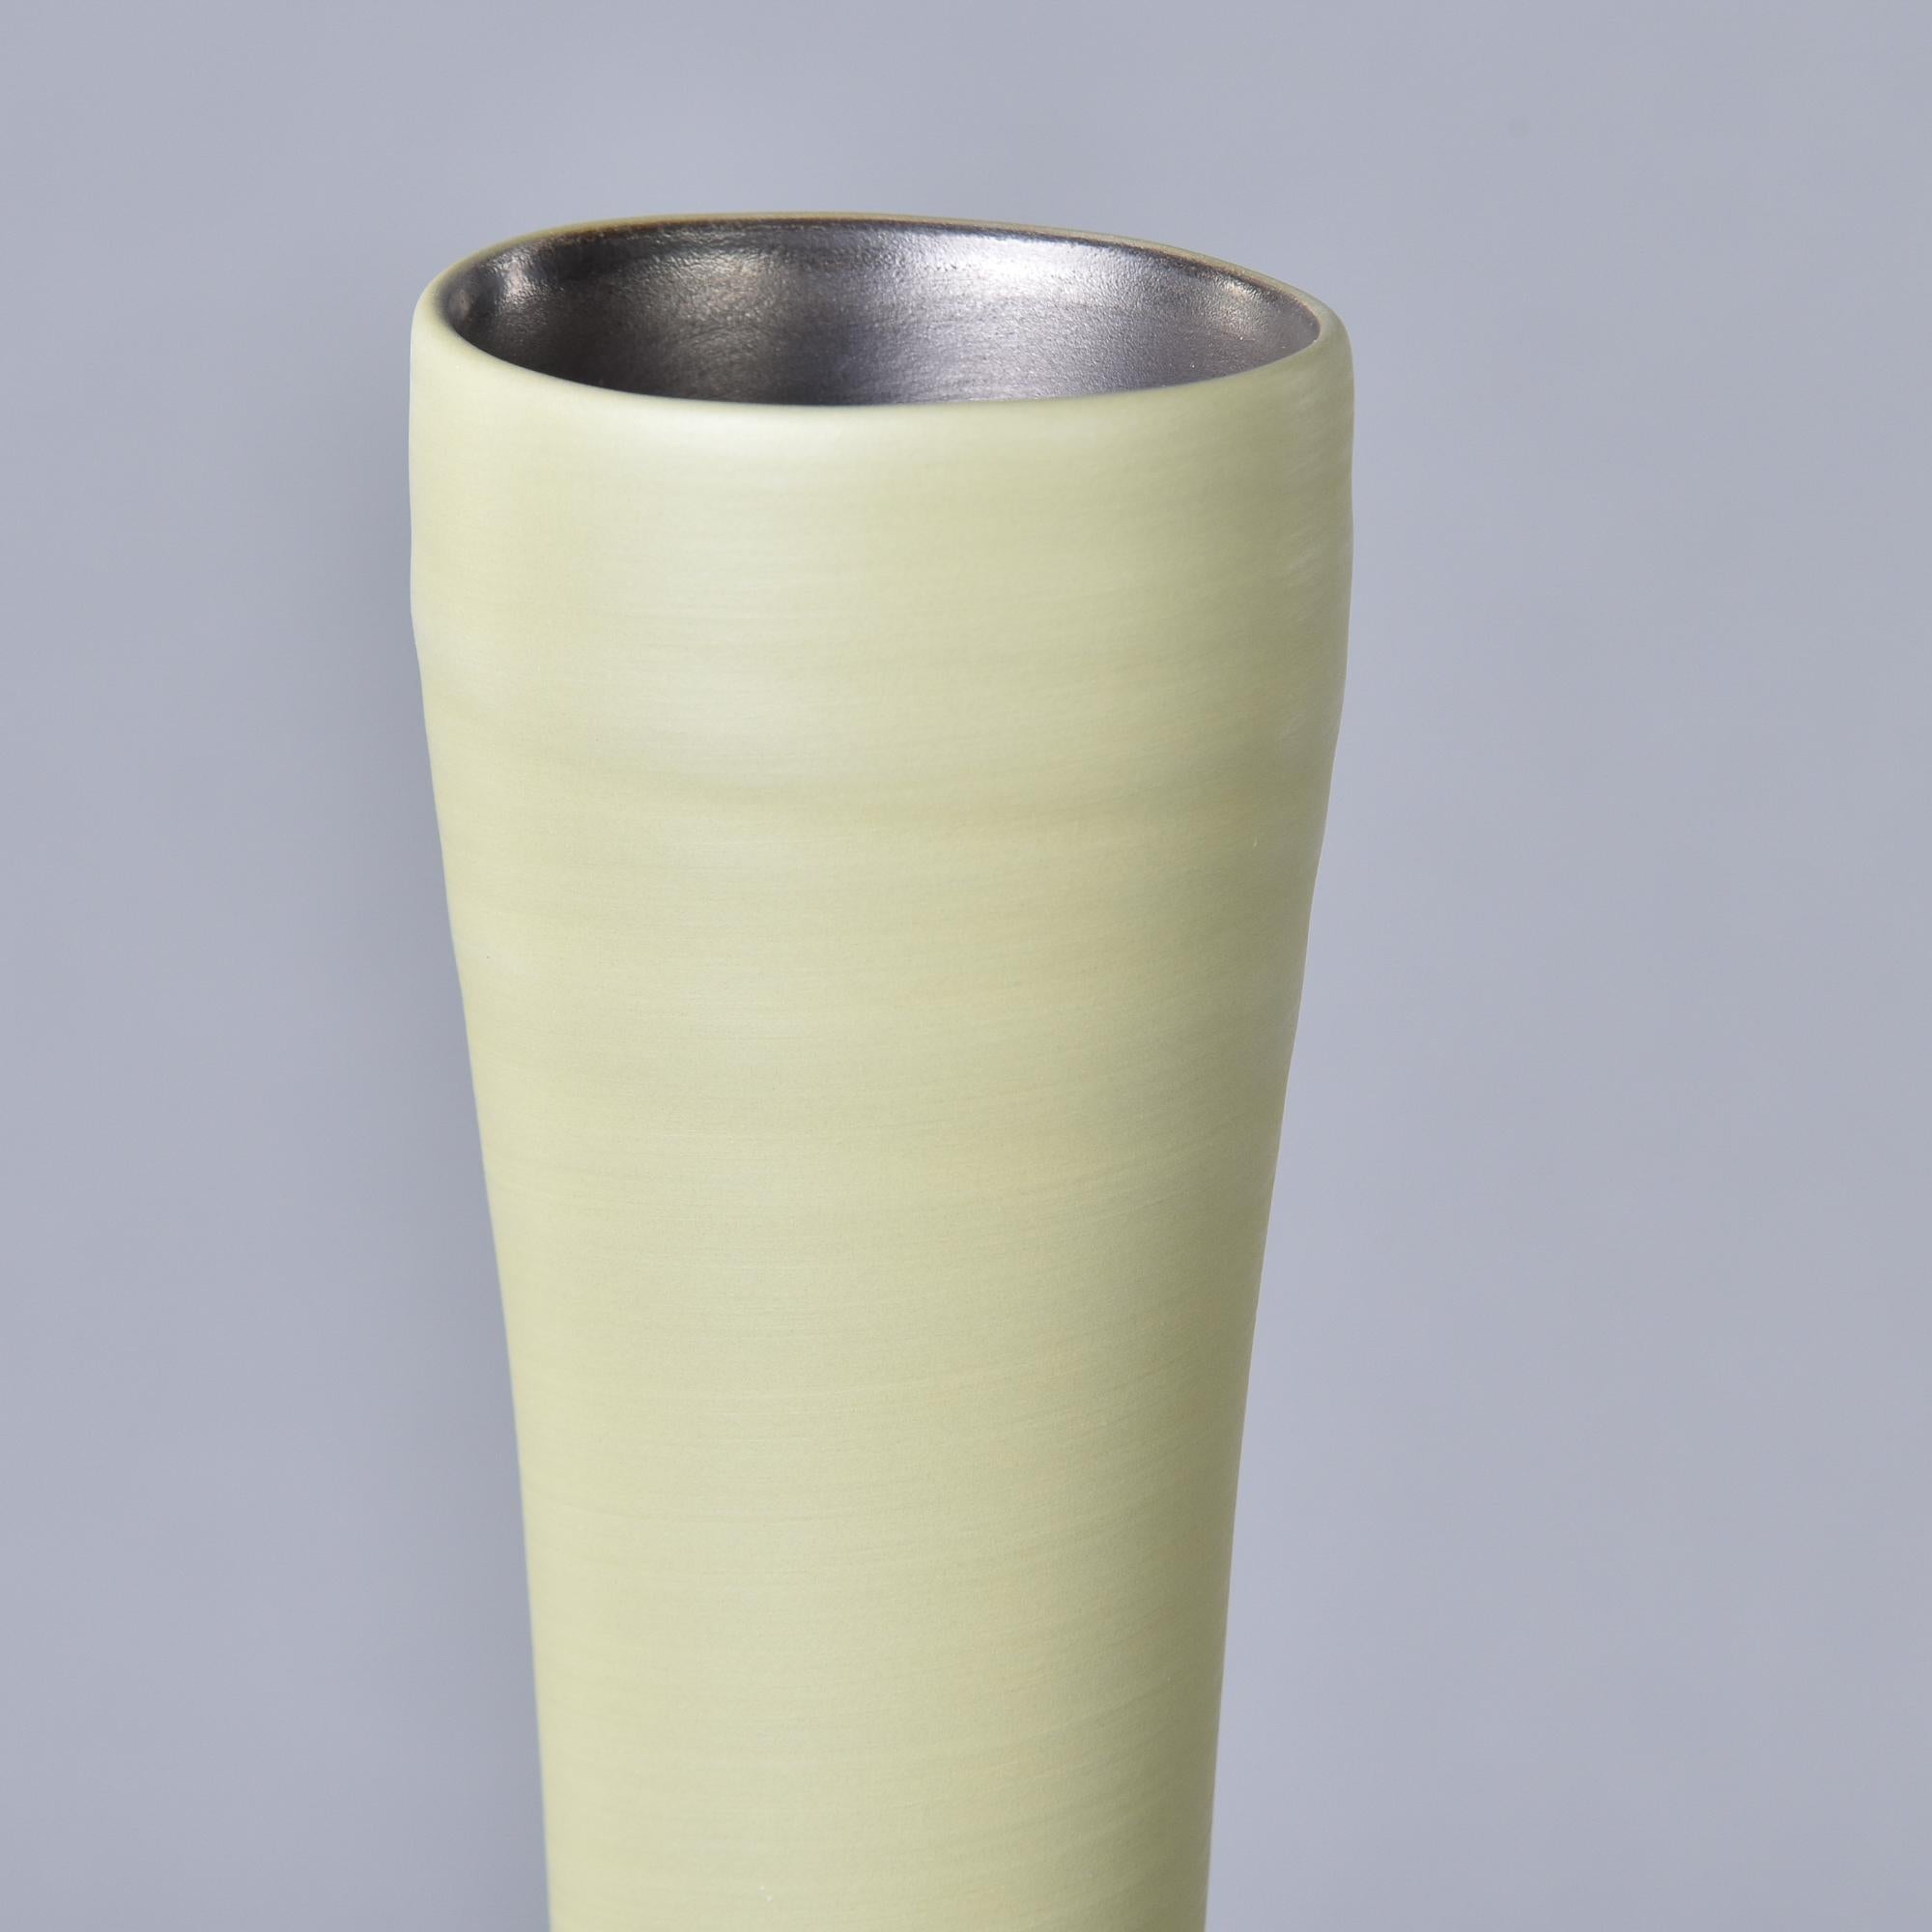 New Rina Menardi Tall Ceramic Flute Vase in Light Pistachio In New Condition For Sale In Troy, MI